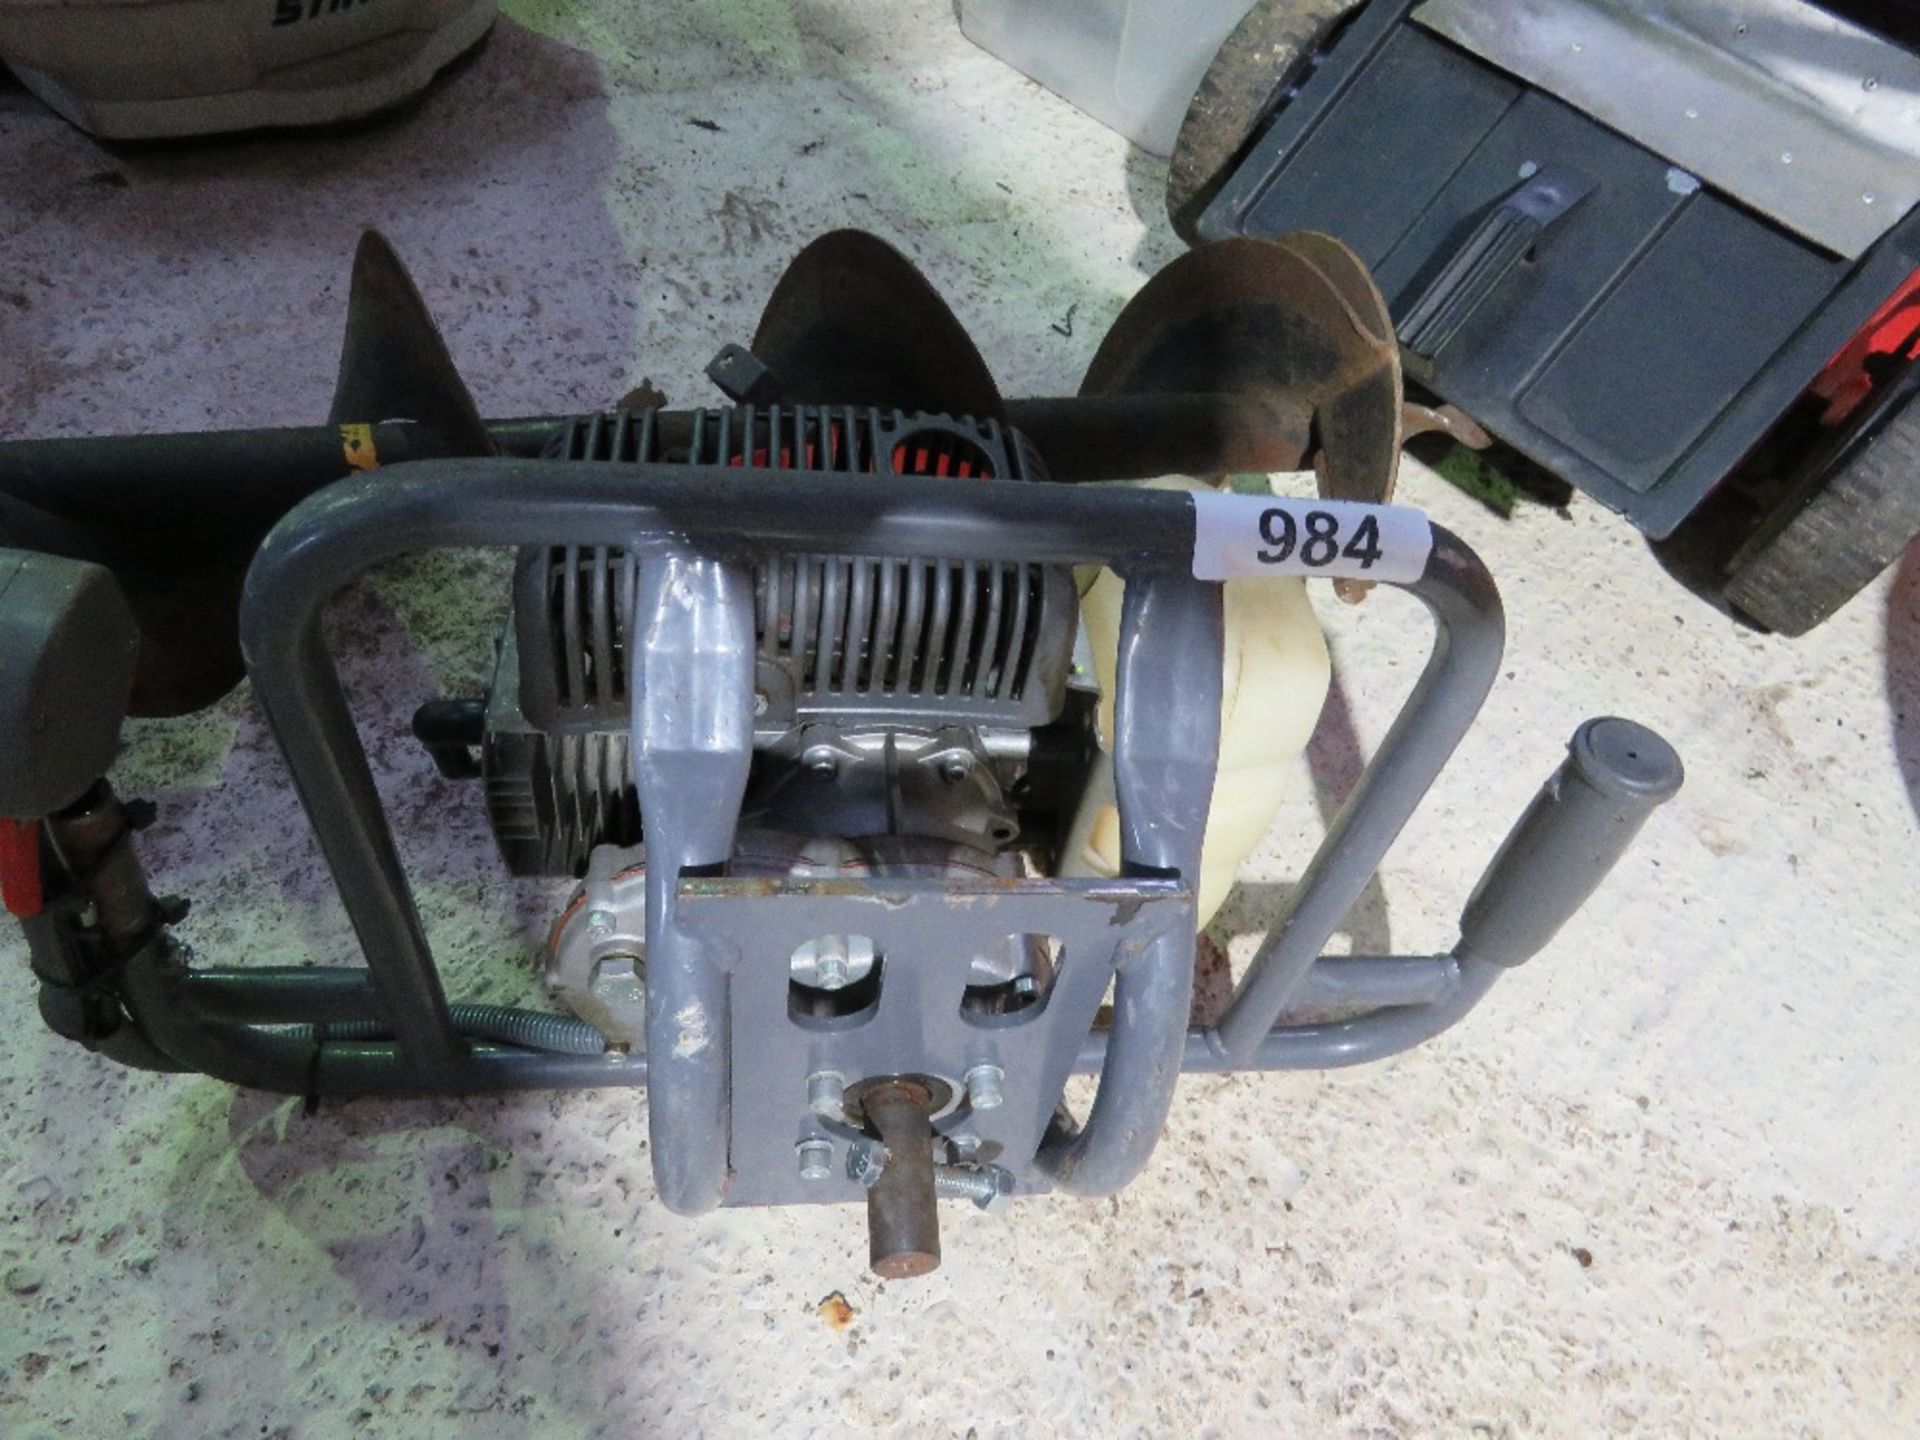 EFCO PETROL ENGINED POST HOLE BORER WITH 8" AUGER BIT. - Image 4 of 4